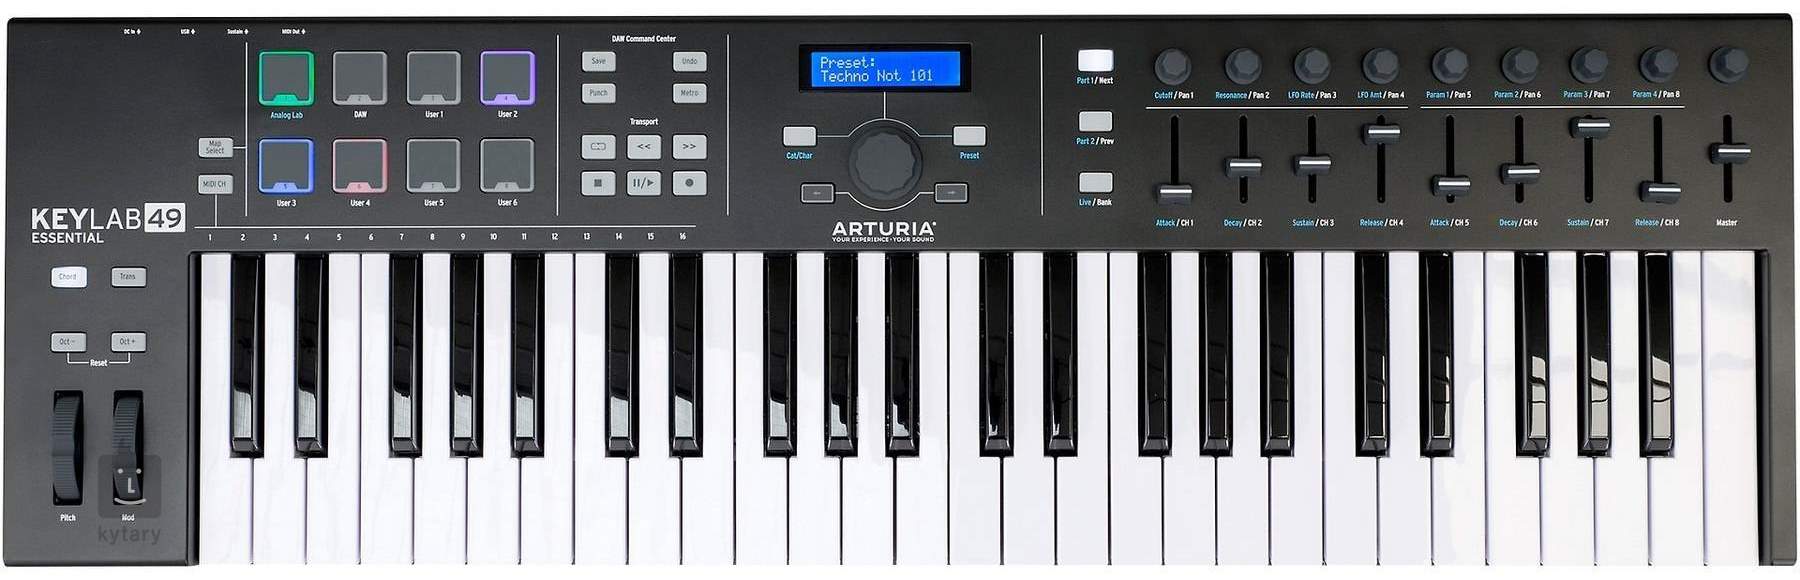 arturia piano keylab 49 power cord